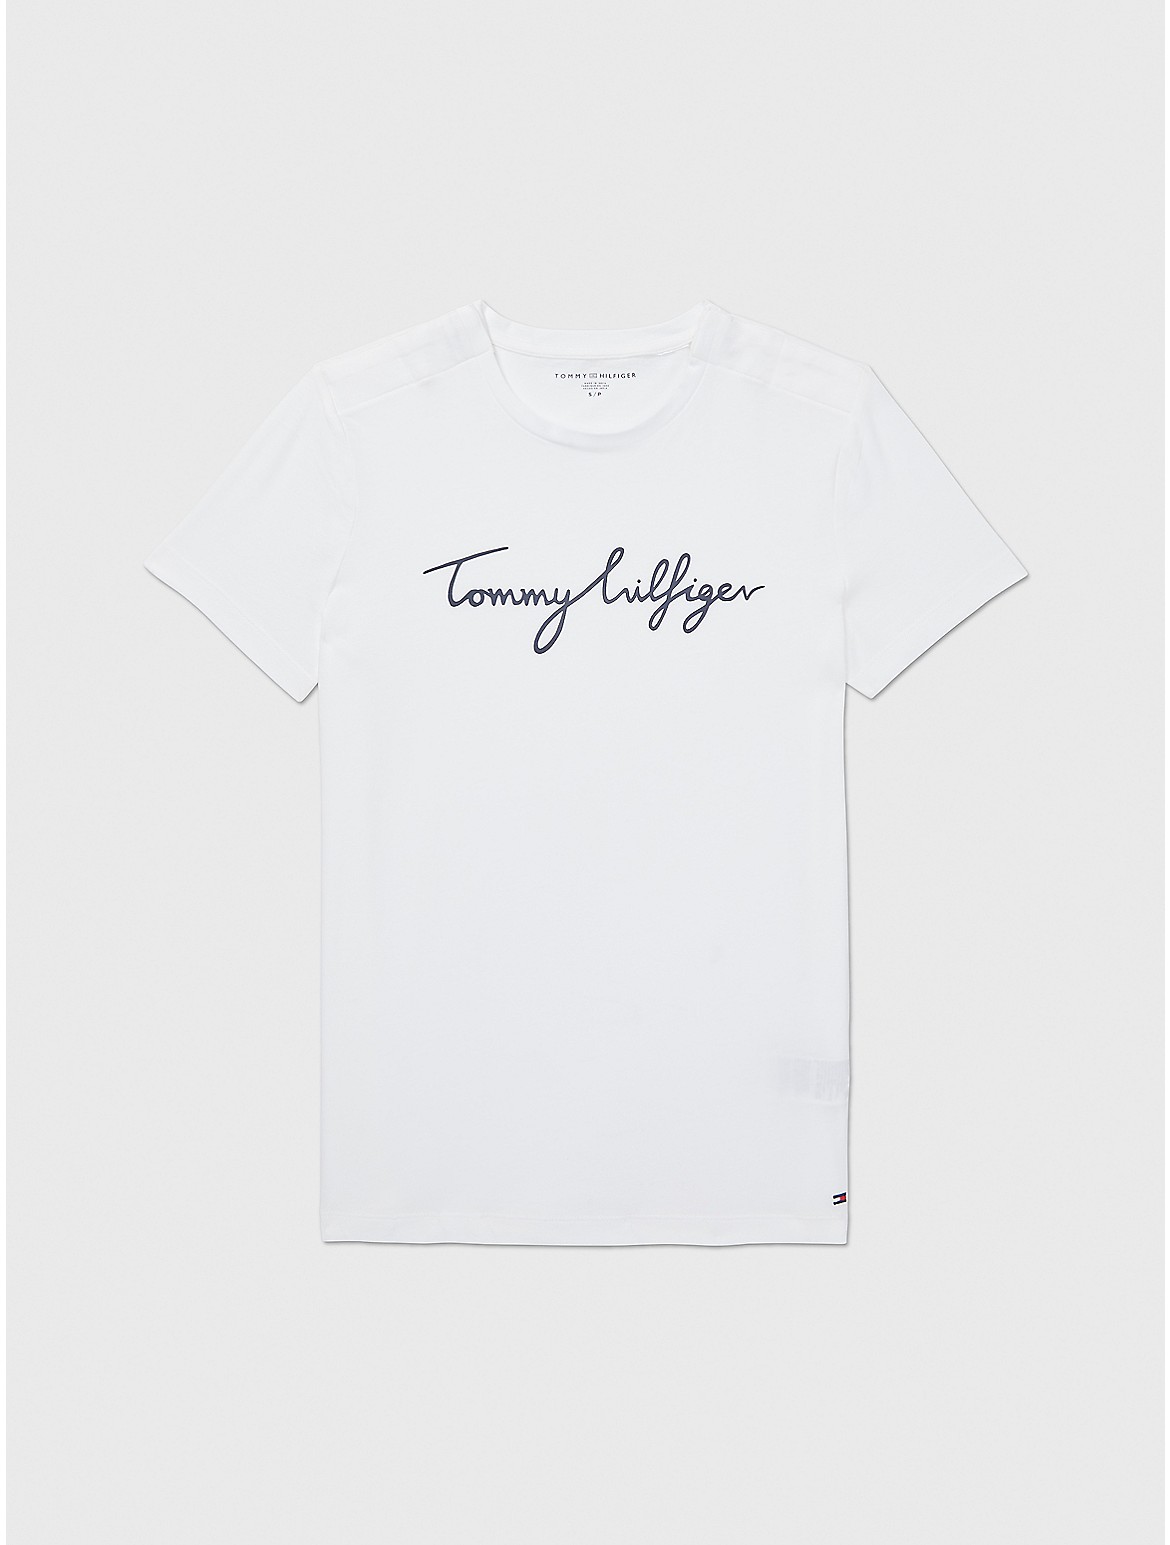 Tommy Hilfiger Women's Signature Graphic T-Shirt